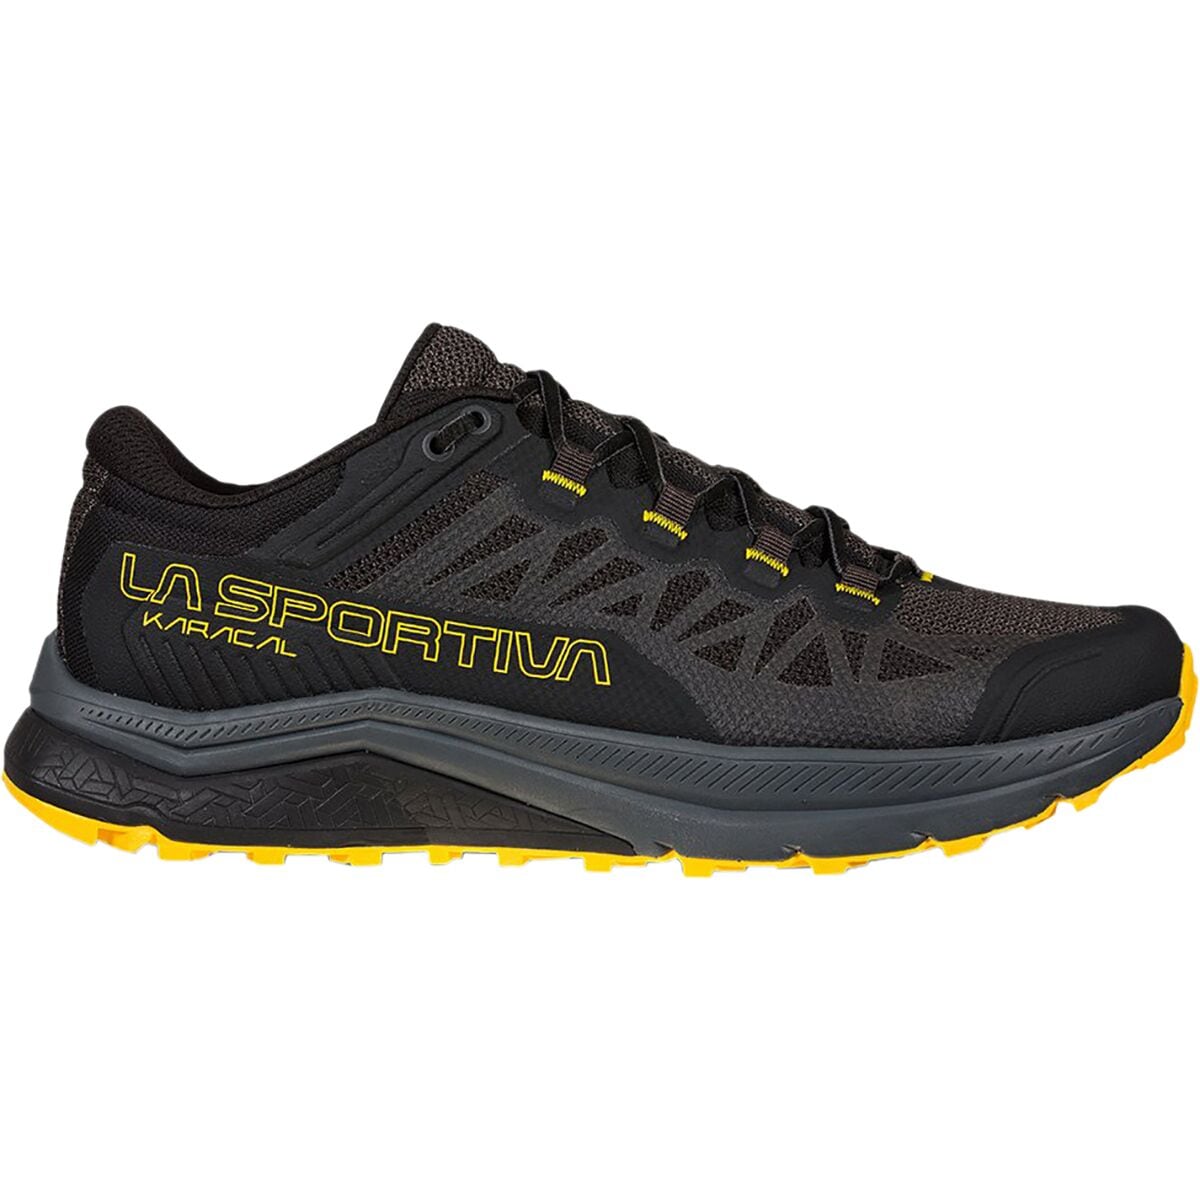 Karacal Trail Running Shoe - Men